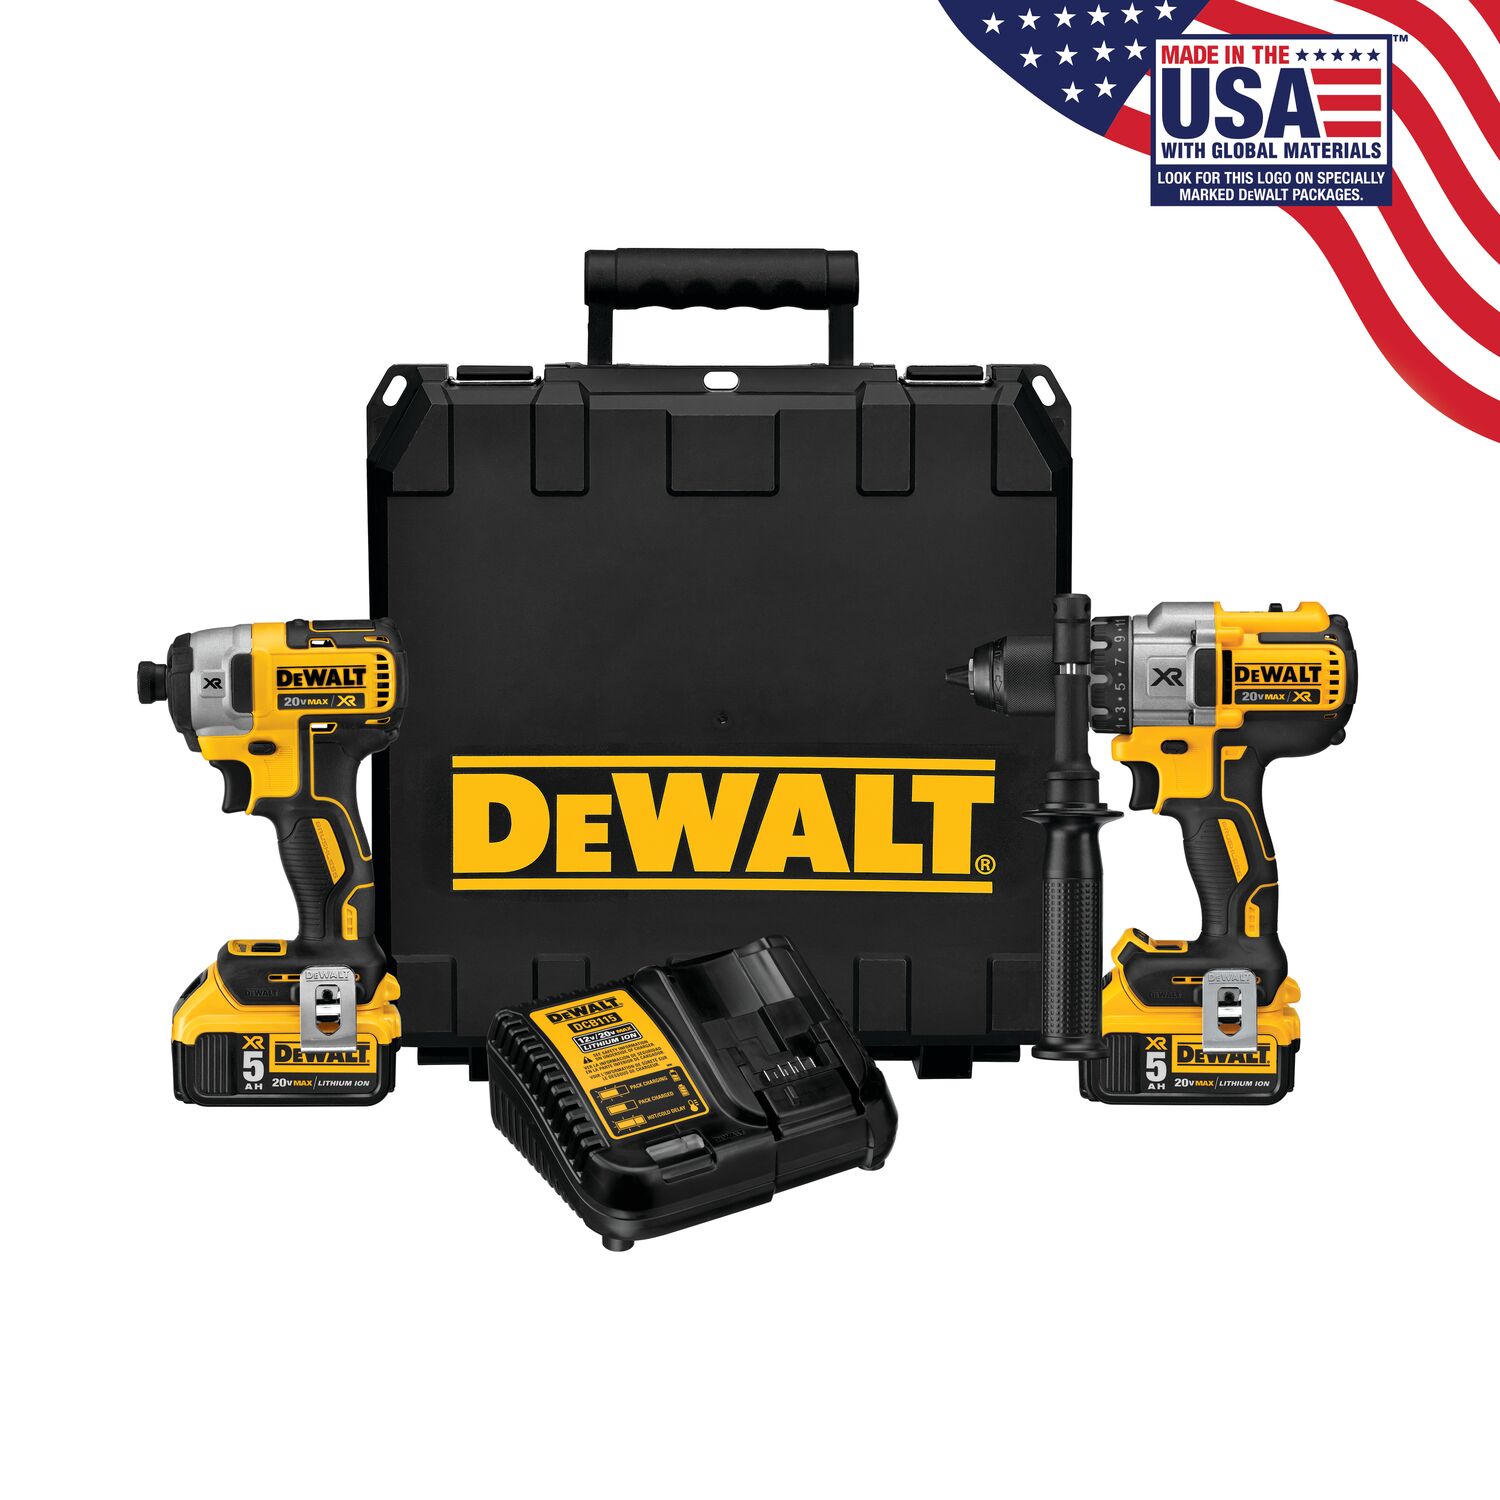 DEWALT XR 2-Tool 20-Volt Brushless Power Tool Combo Kit with Hard